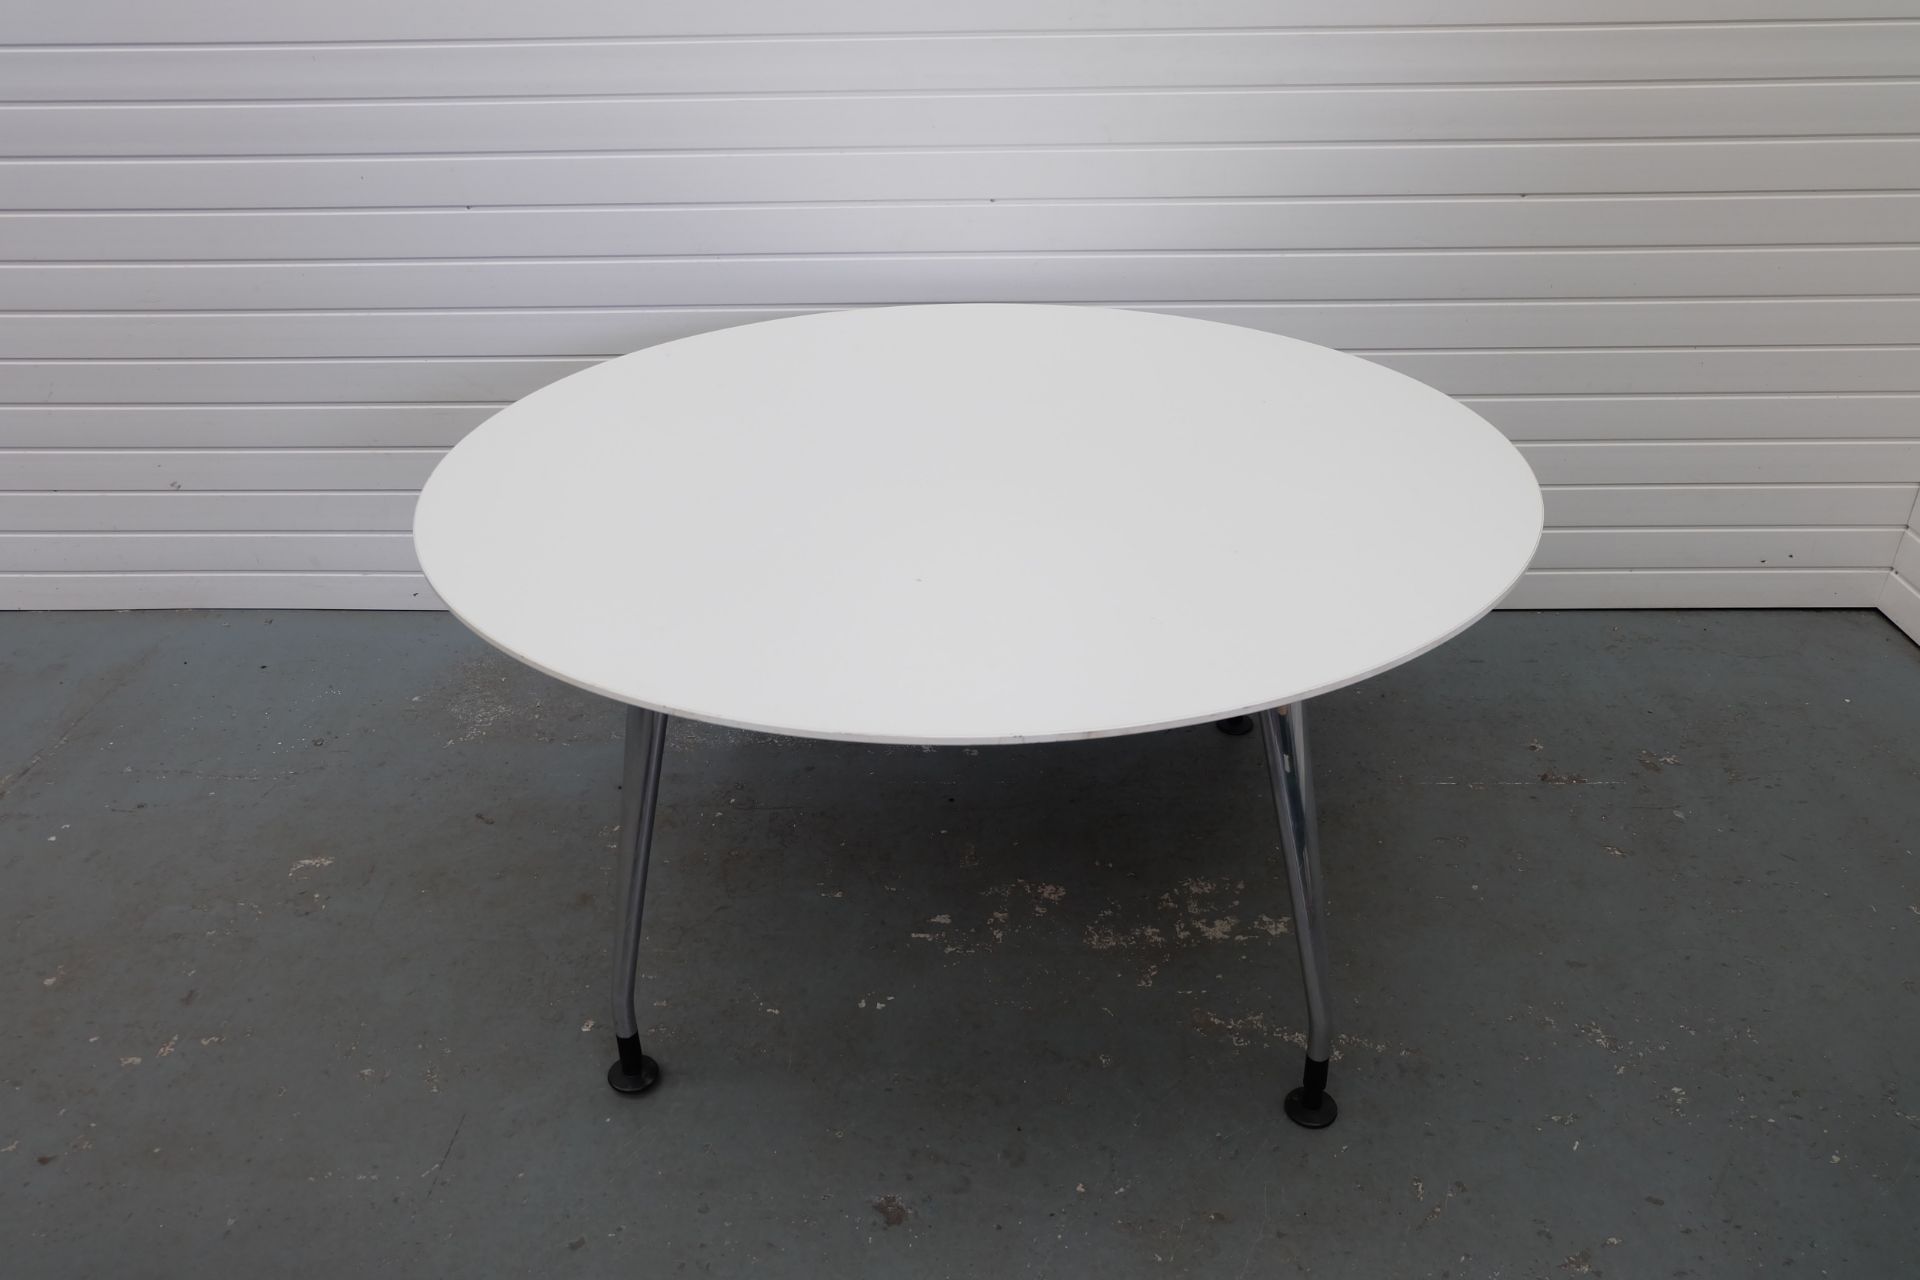 White Round Table. 4 Metal Legs and Adjustable Feet. Size 1500mm Diameter x 800mm High. - Bild 2 aus 3